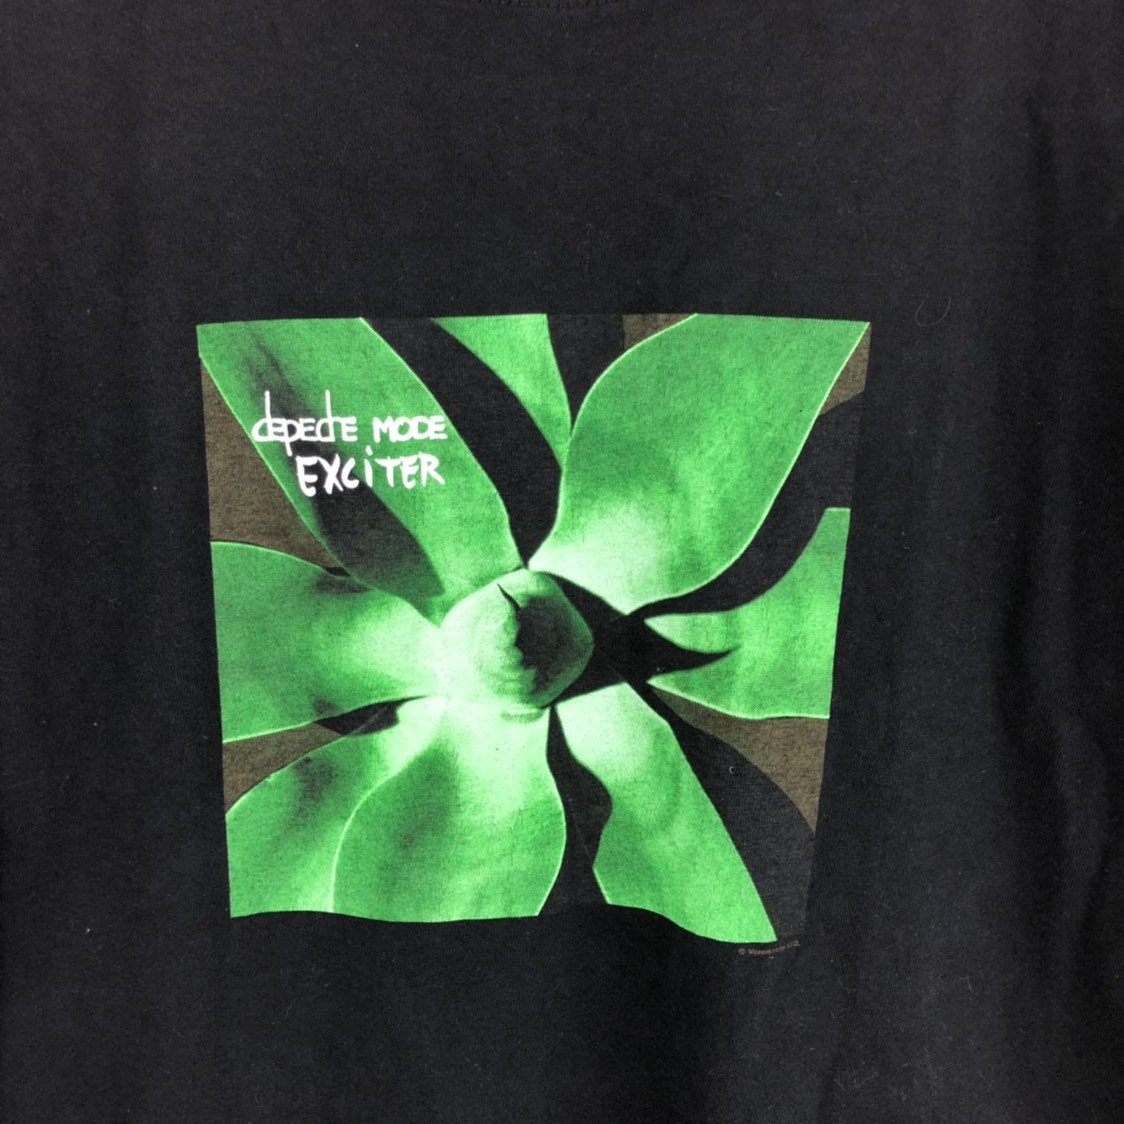 Vintage Depeche Mode Shirt / Exciter / Band T Shirt / Tour | Etsy